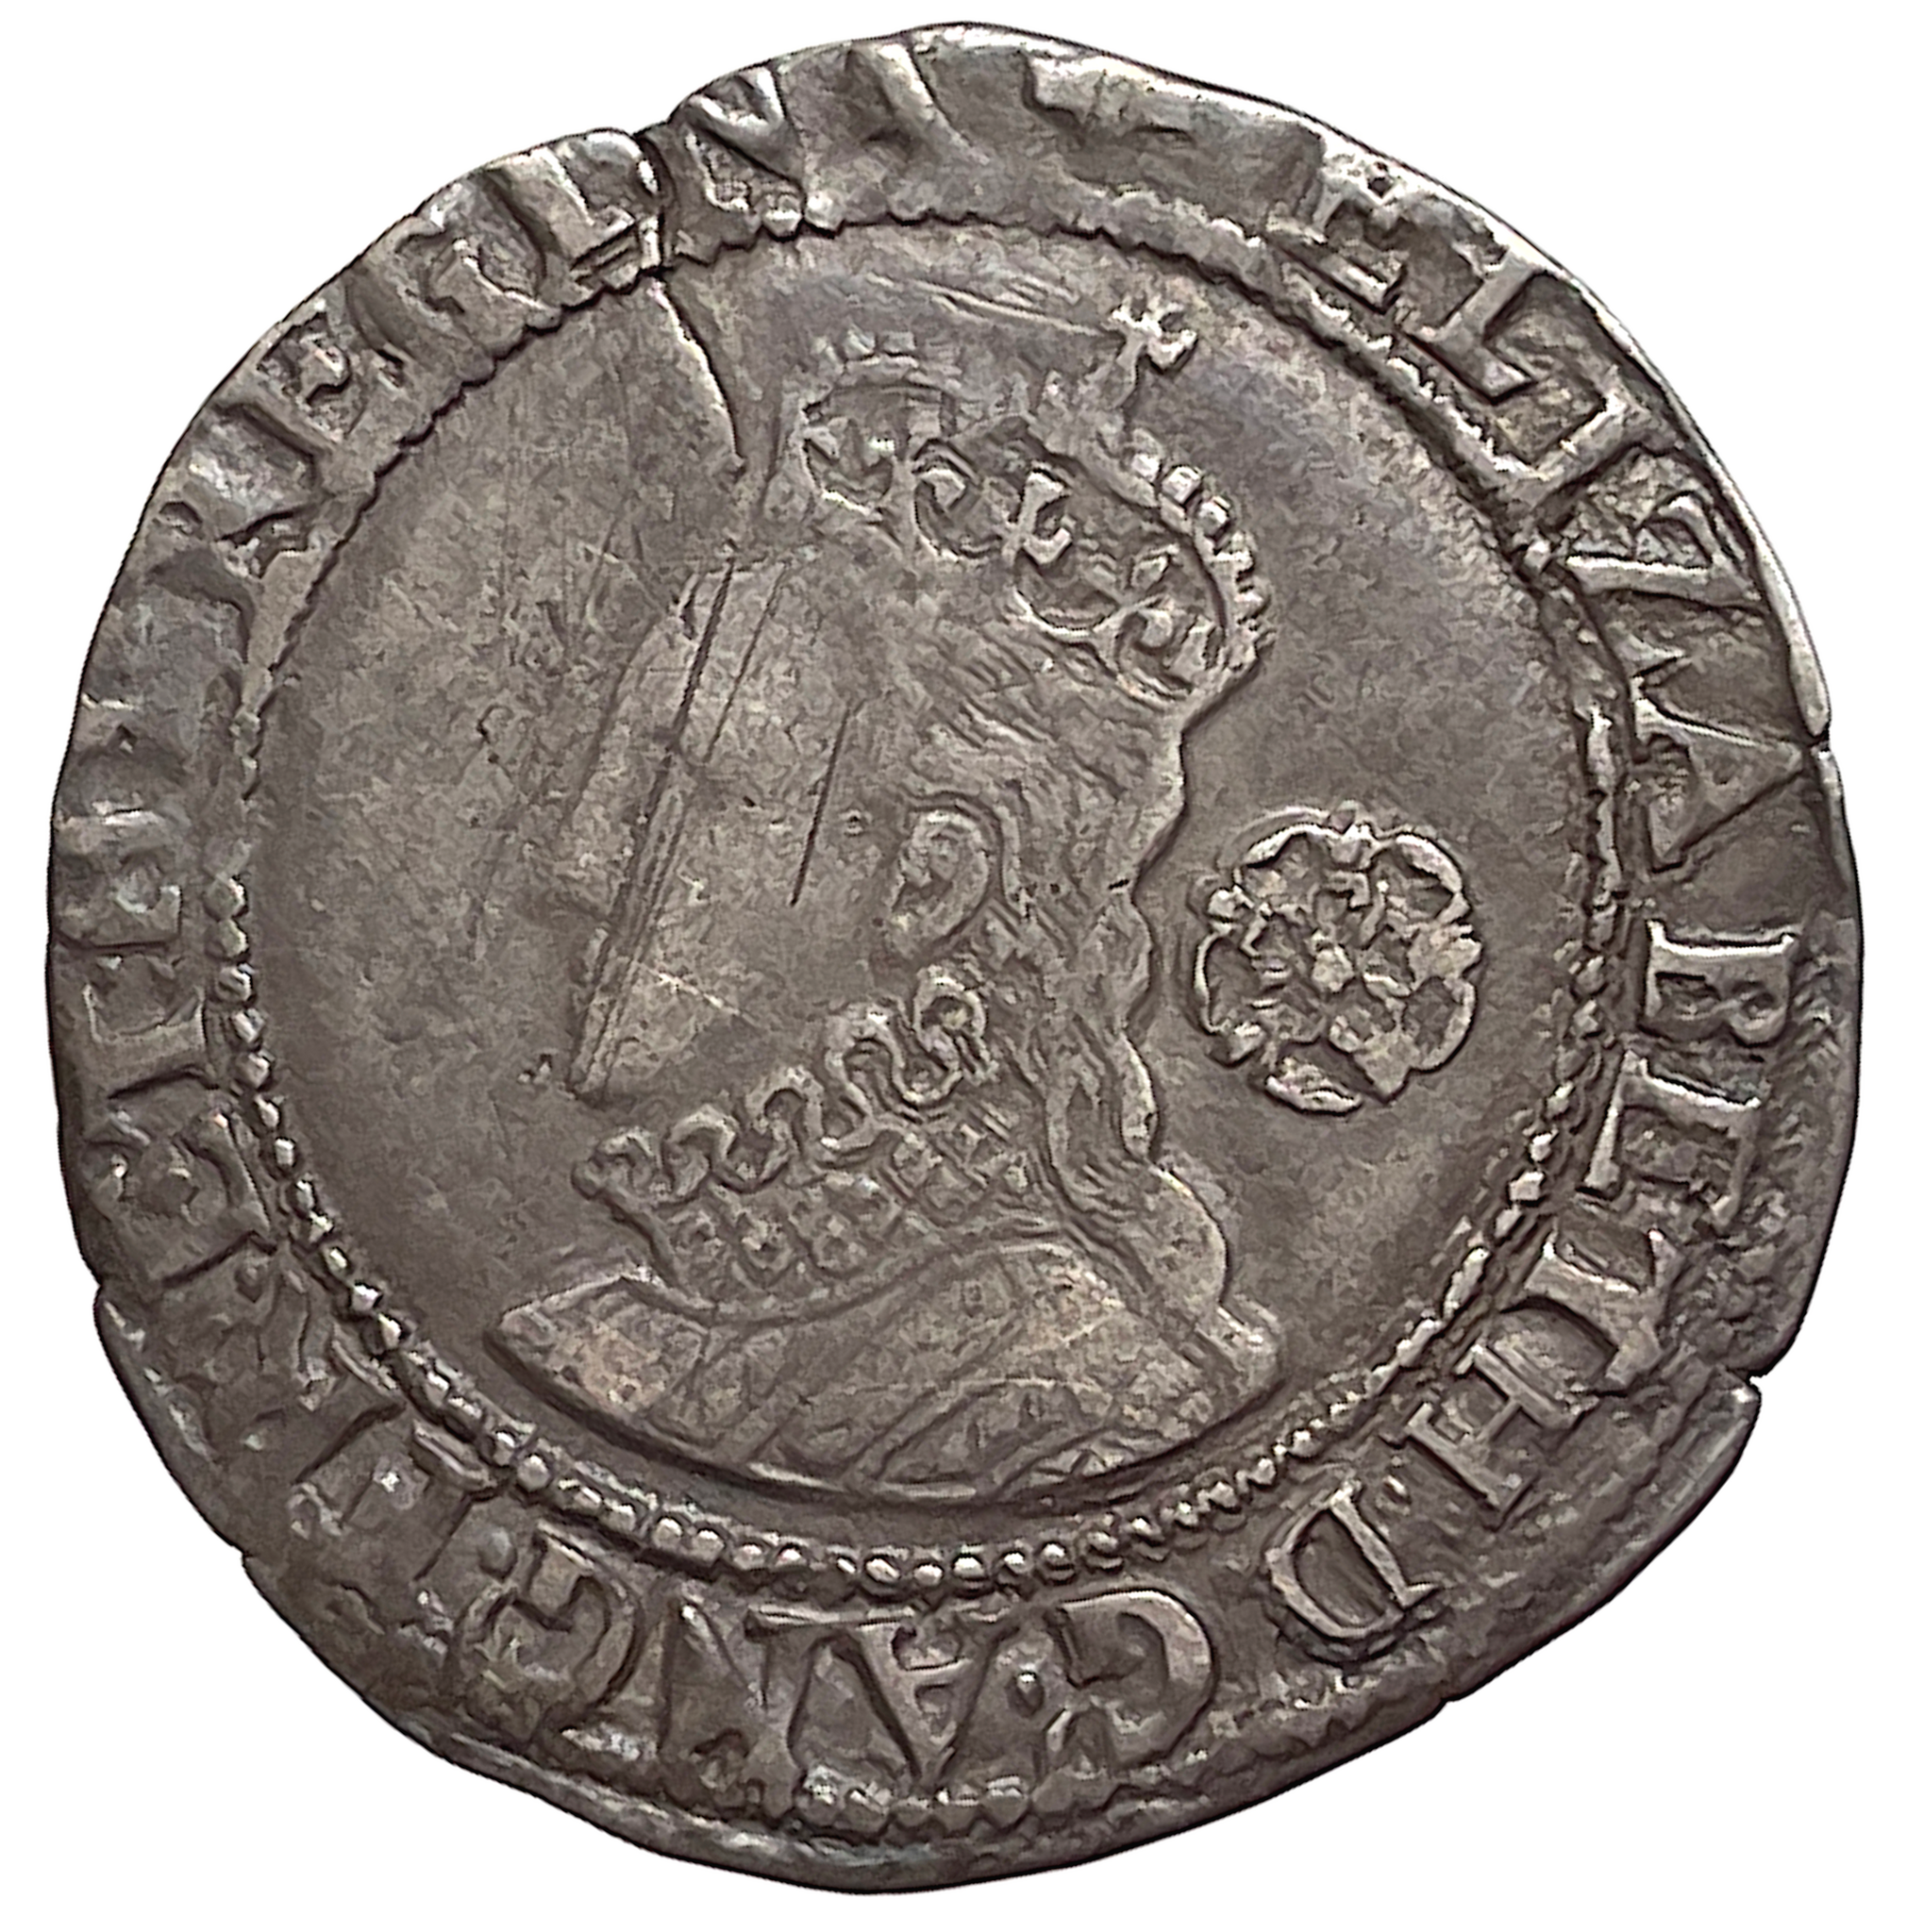 Elizabeth I (1558-1603). 6 pence 1579 - Ett historisk betydelsefullt mynt